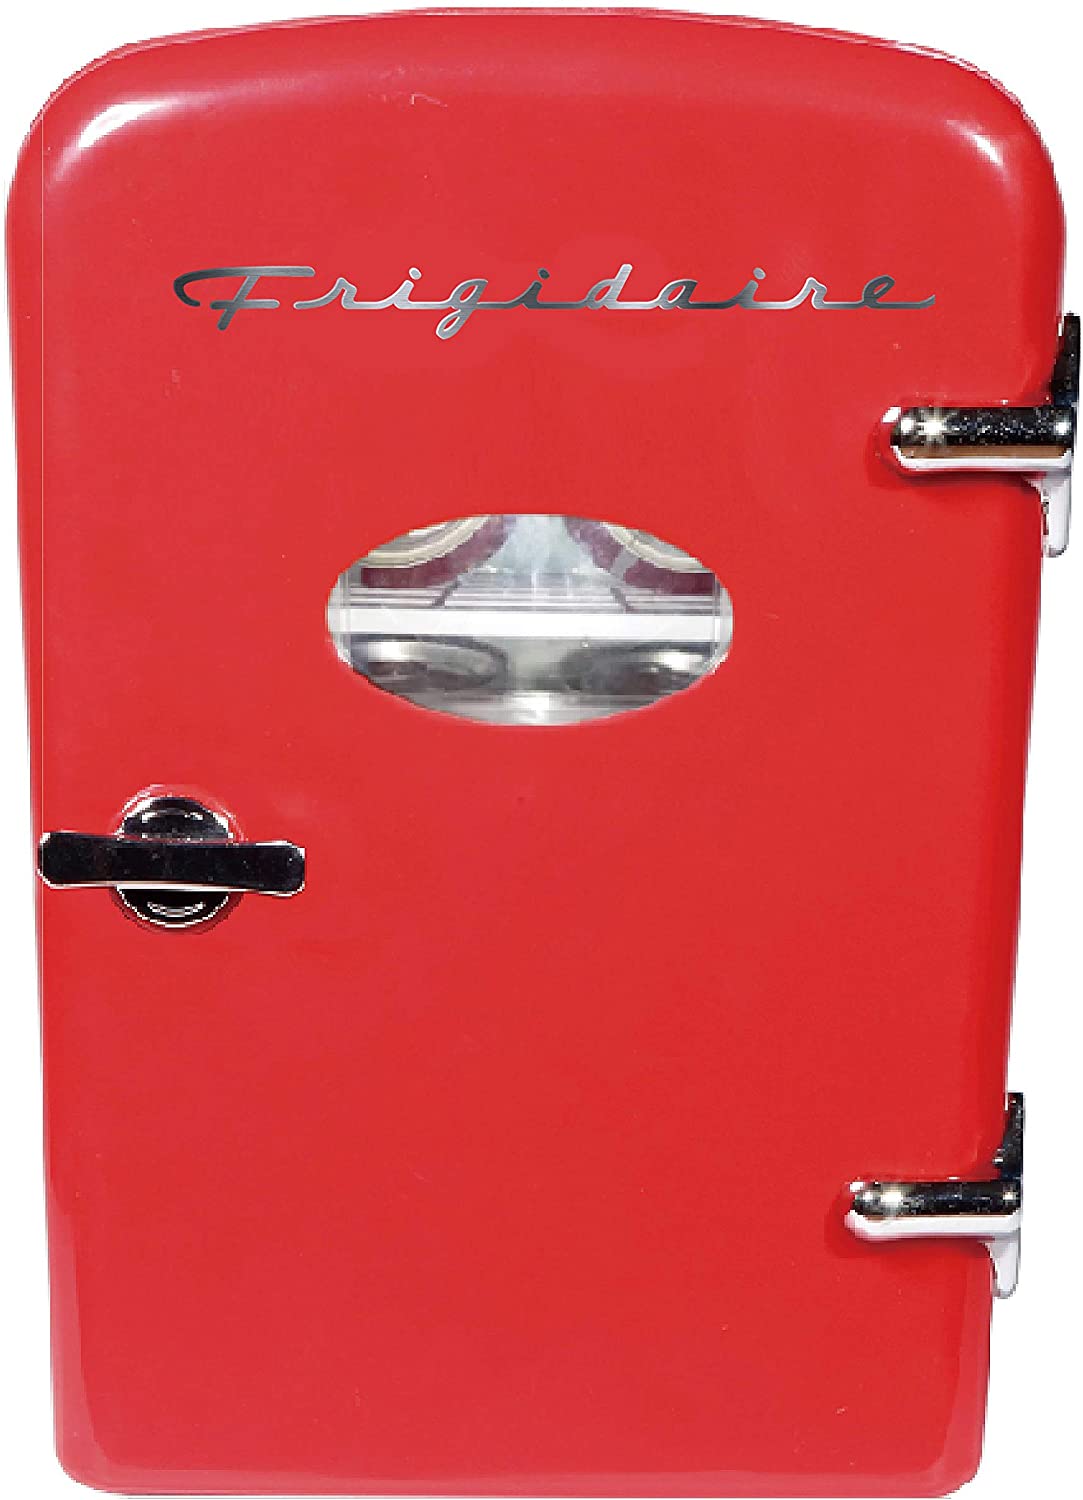 frigidair mini fridge red 2